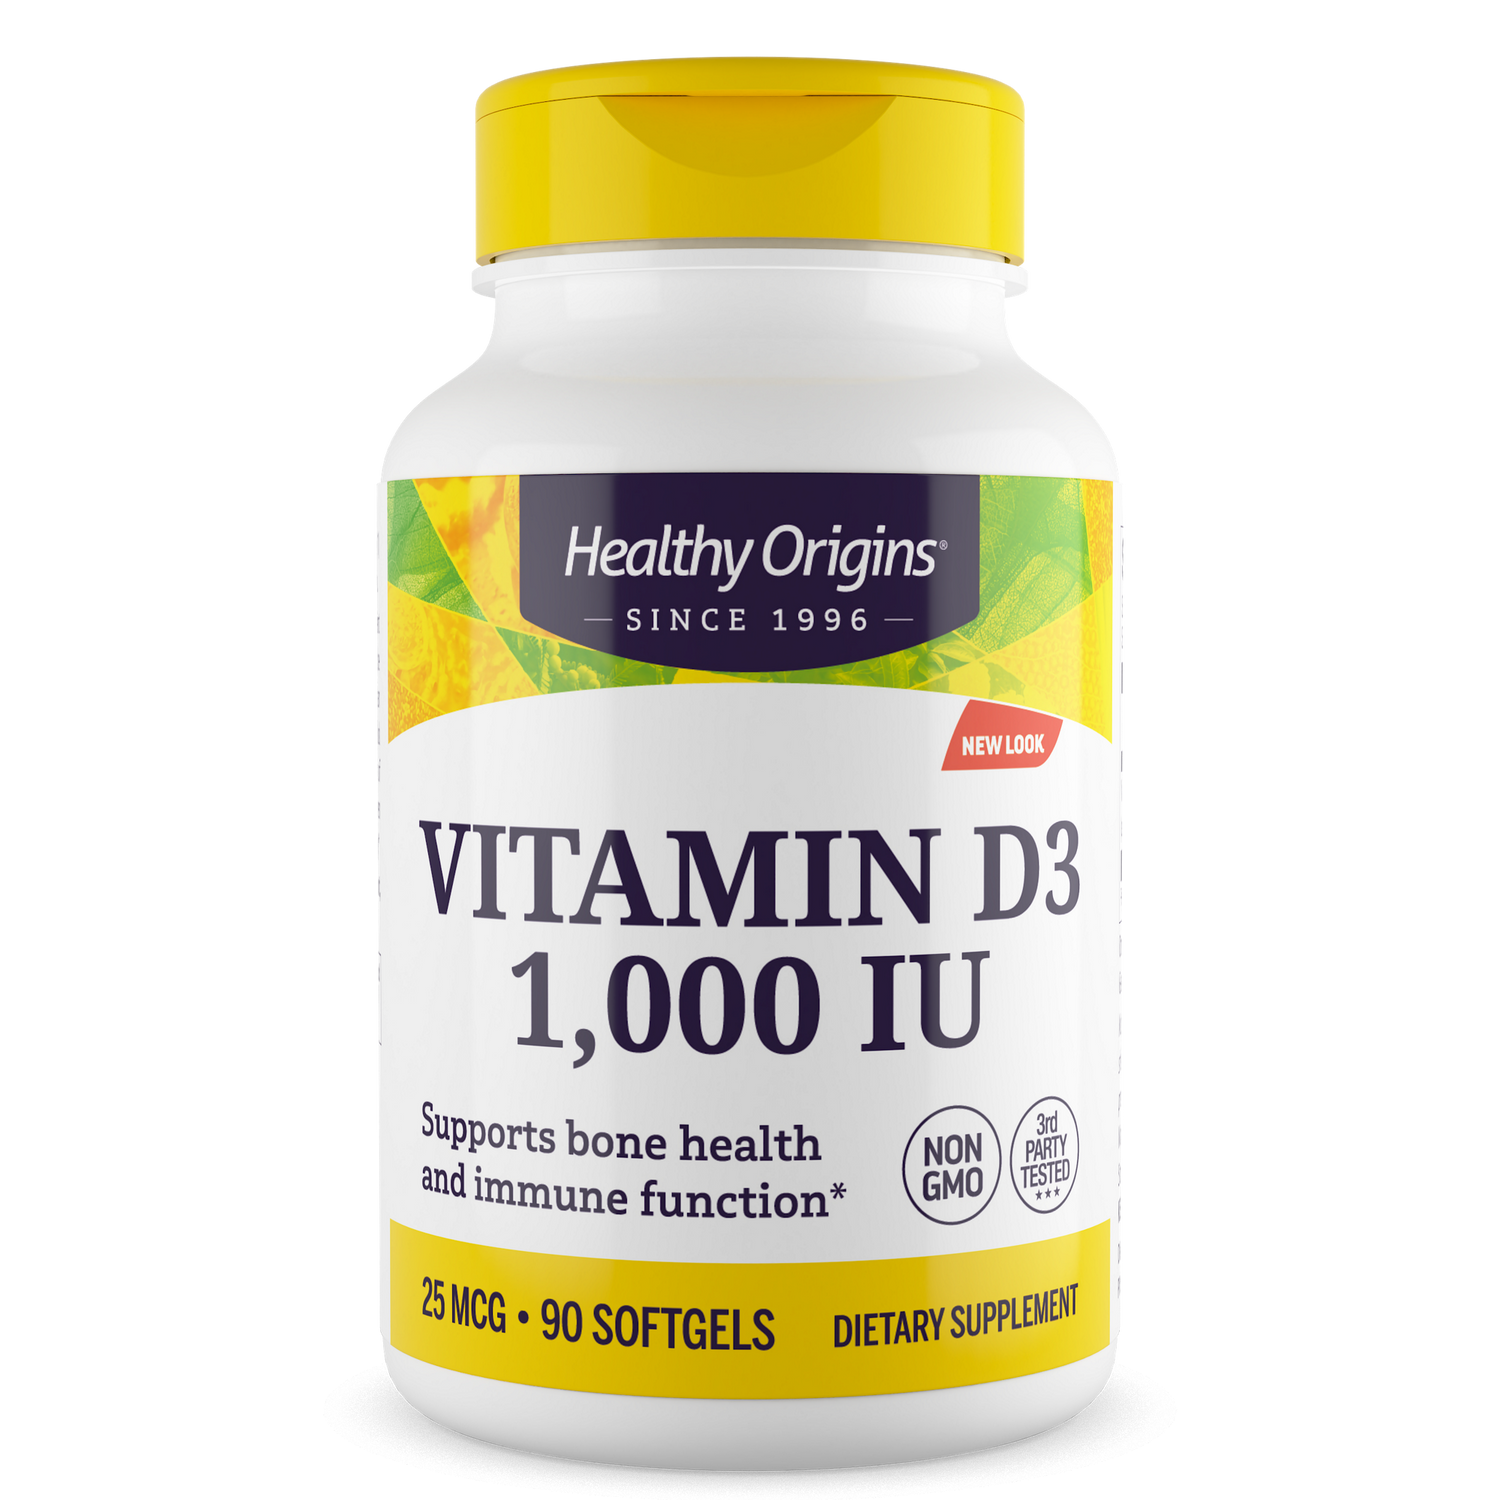 Vitamin Dз 1,000 IU